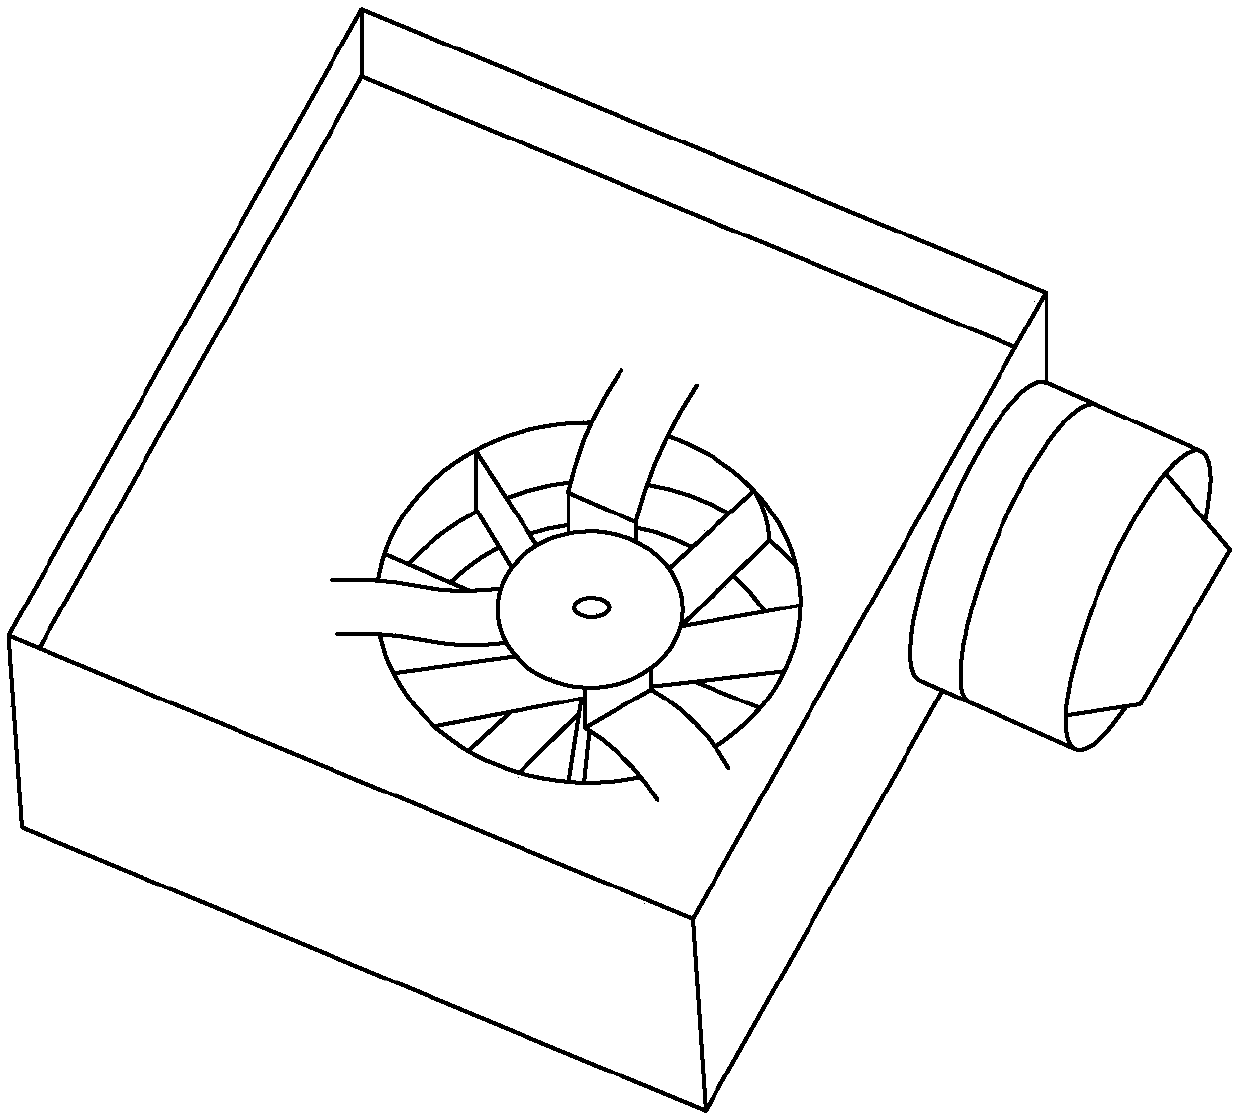 Centrifugal fluid equipment and centrifugal impeller used by centrifugal fluid equipment